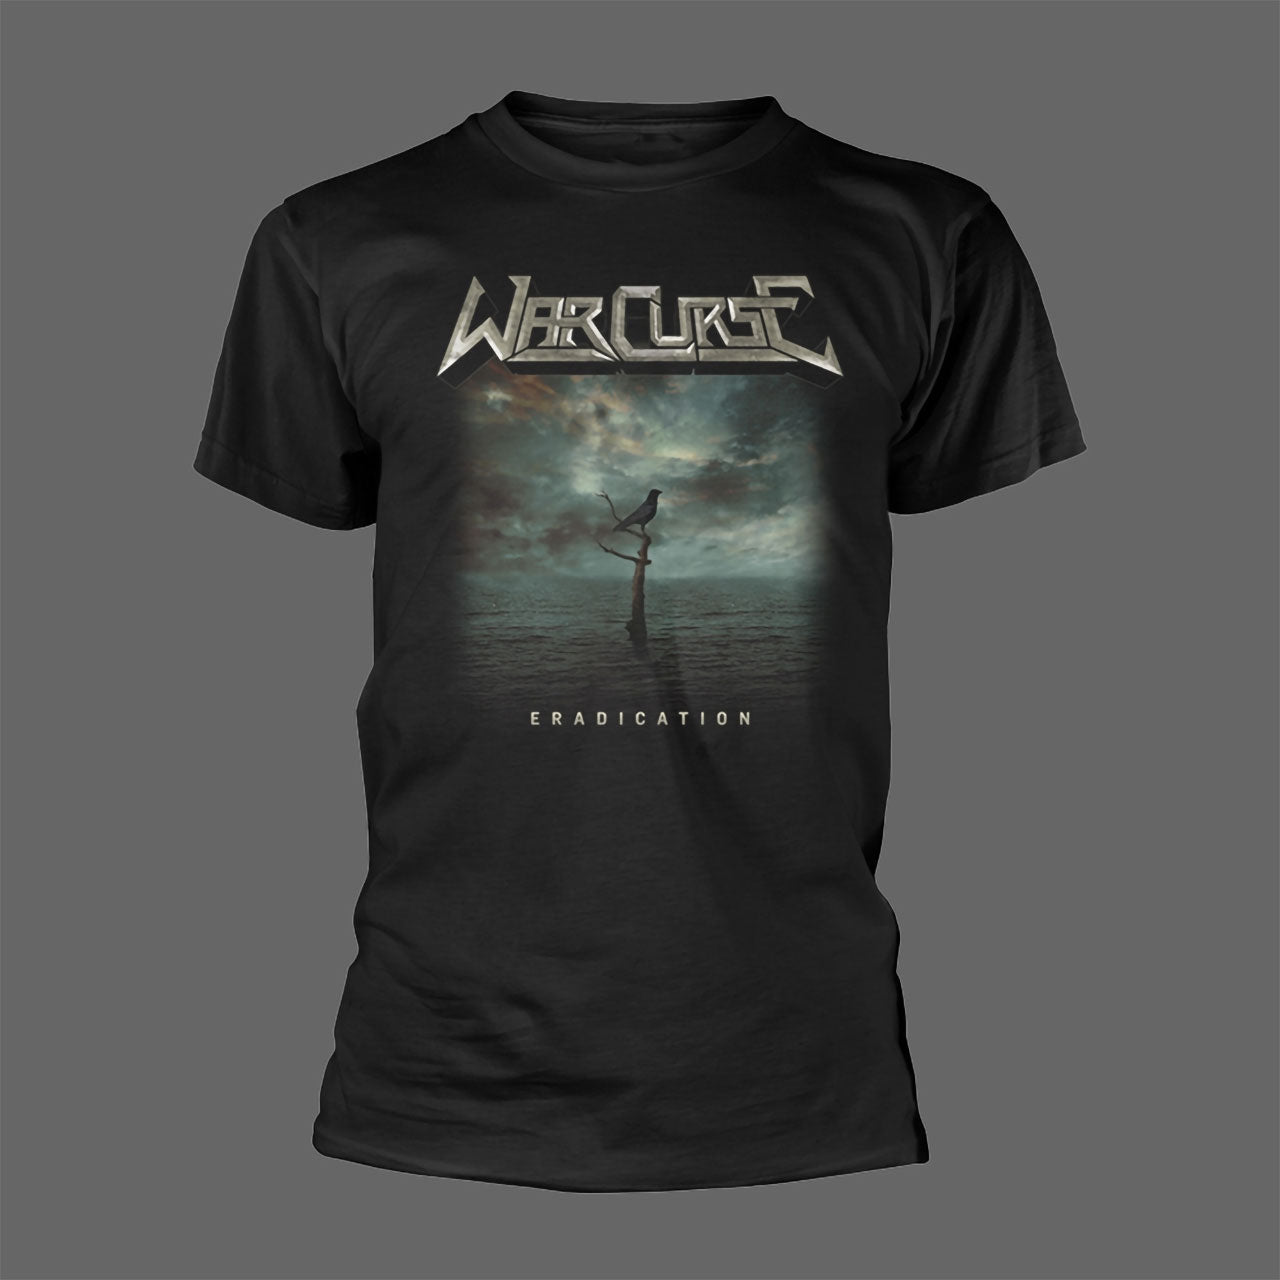 War Curse - Eradication (T-Shirt)